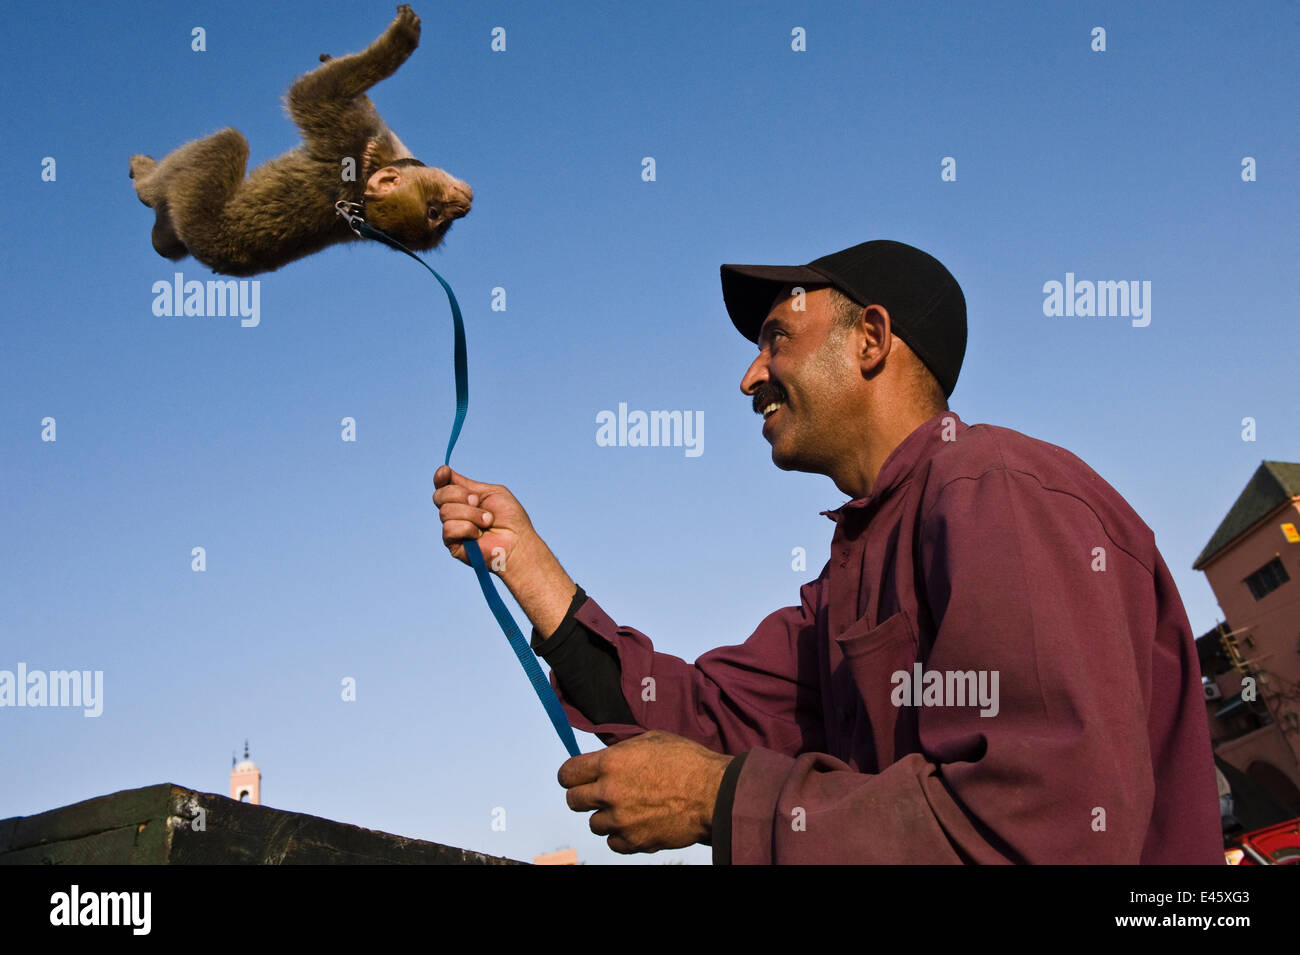 Man with performing pet Barbary ape (Macaca sulvanus) Morocco, June 2009 Stock Photo